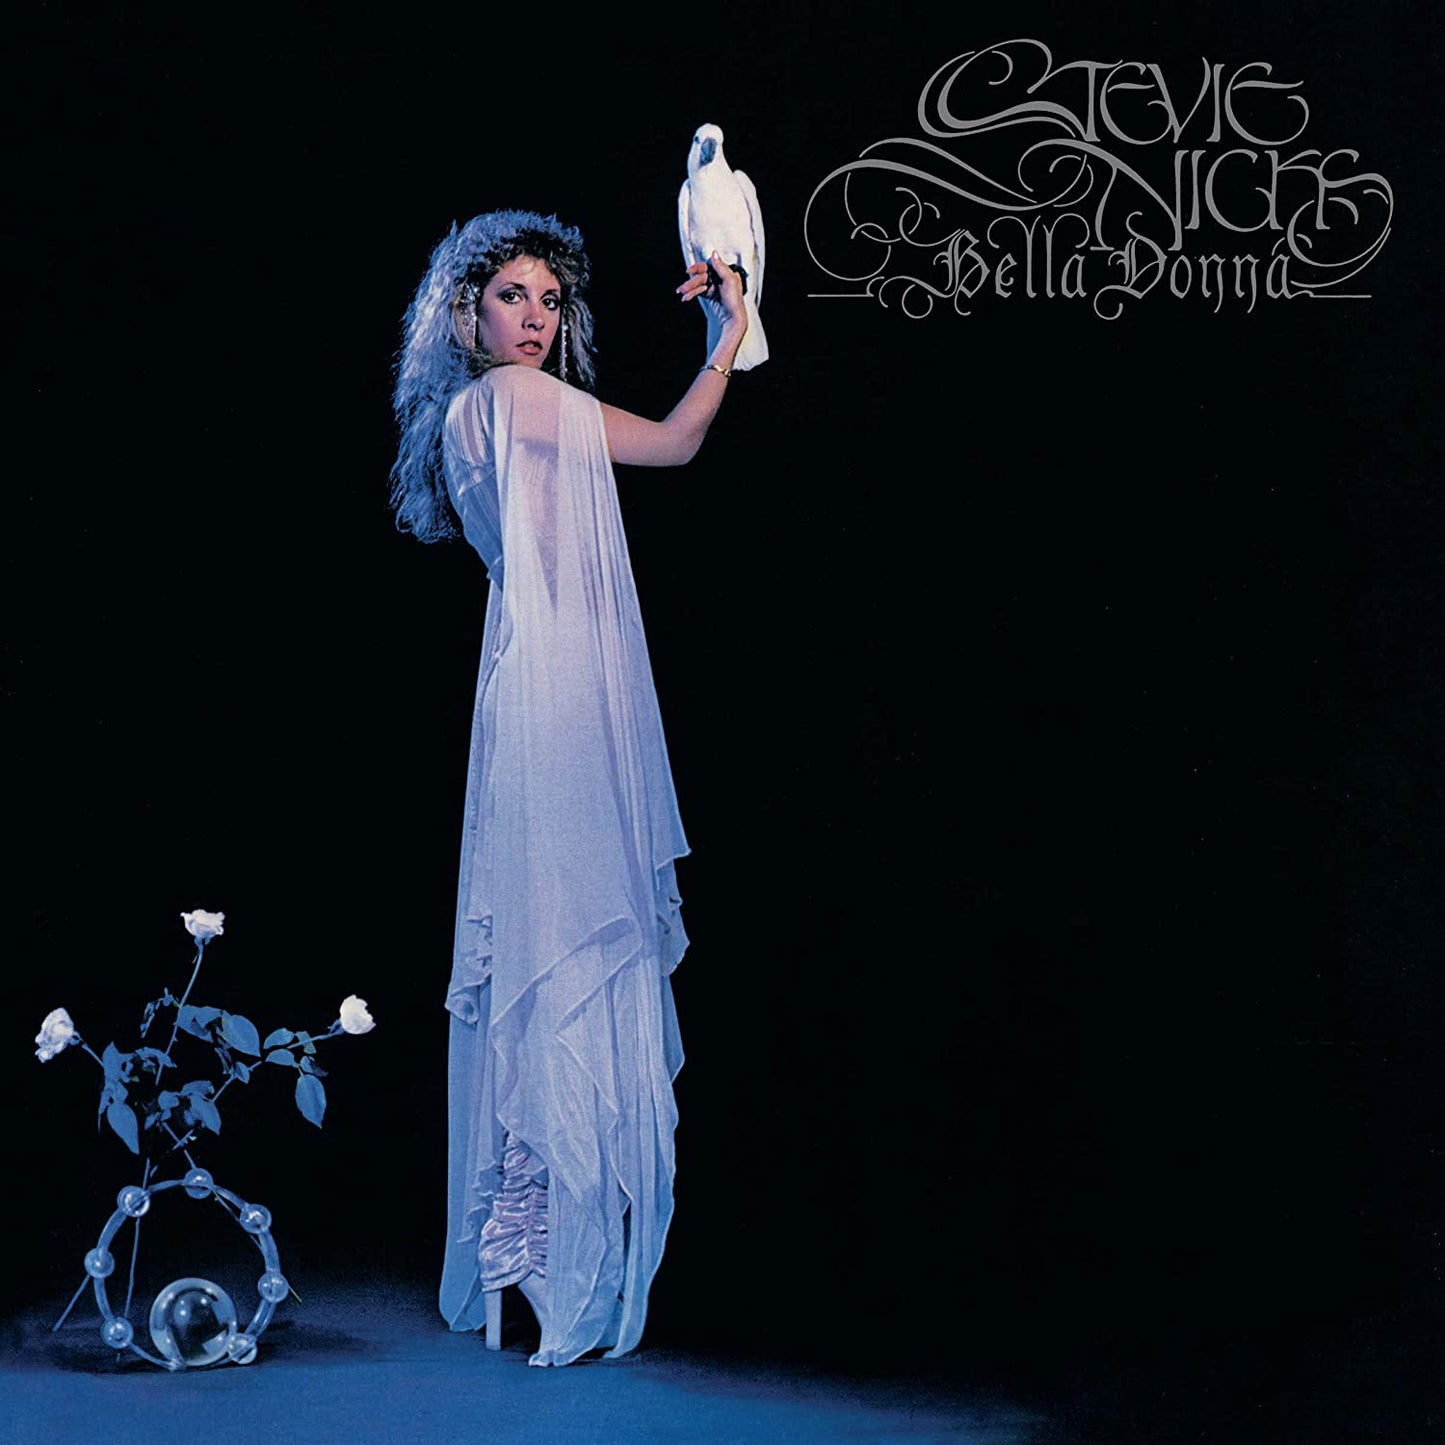 Stevie Nicks - Bella Donna (Deluxe)